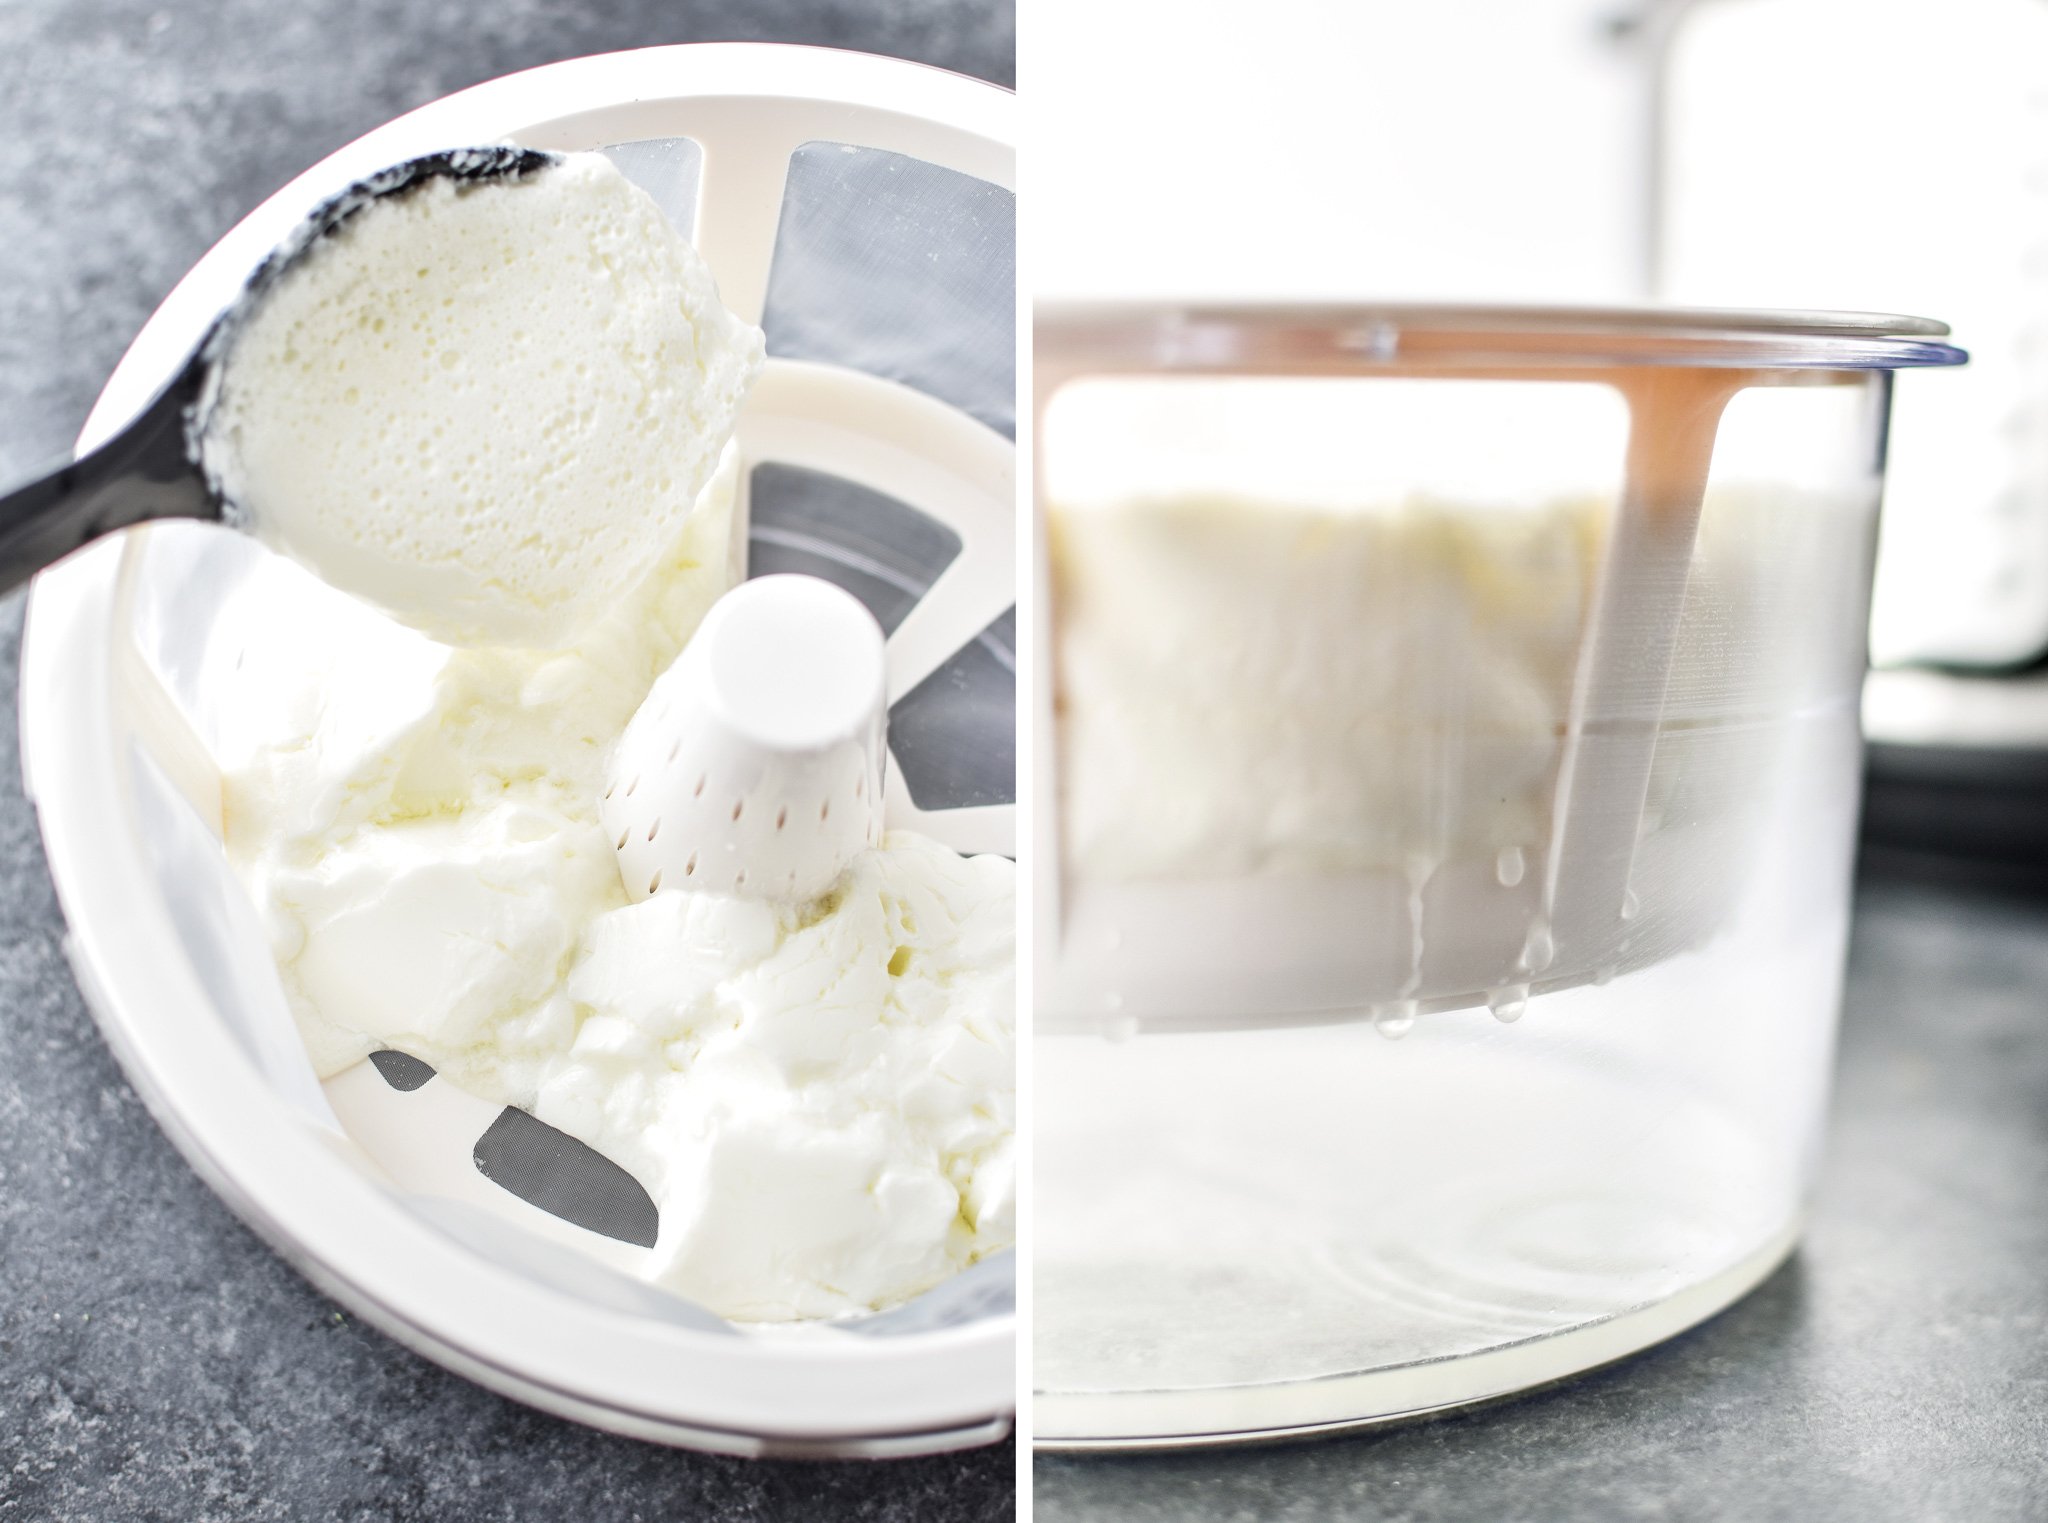 Left: Adding yogurt to the strainer. Right: Yogurt straining in the strainer with whey draining off.